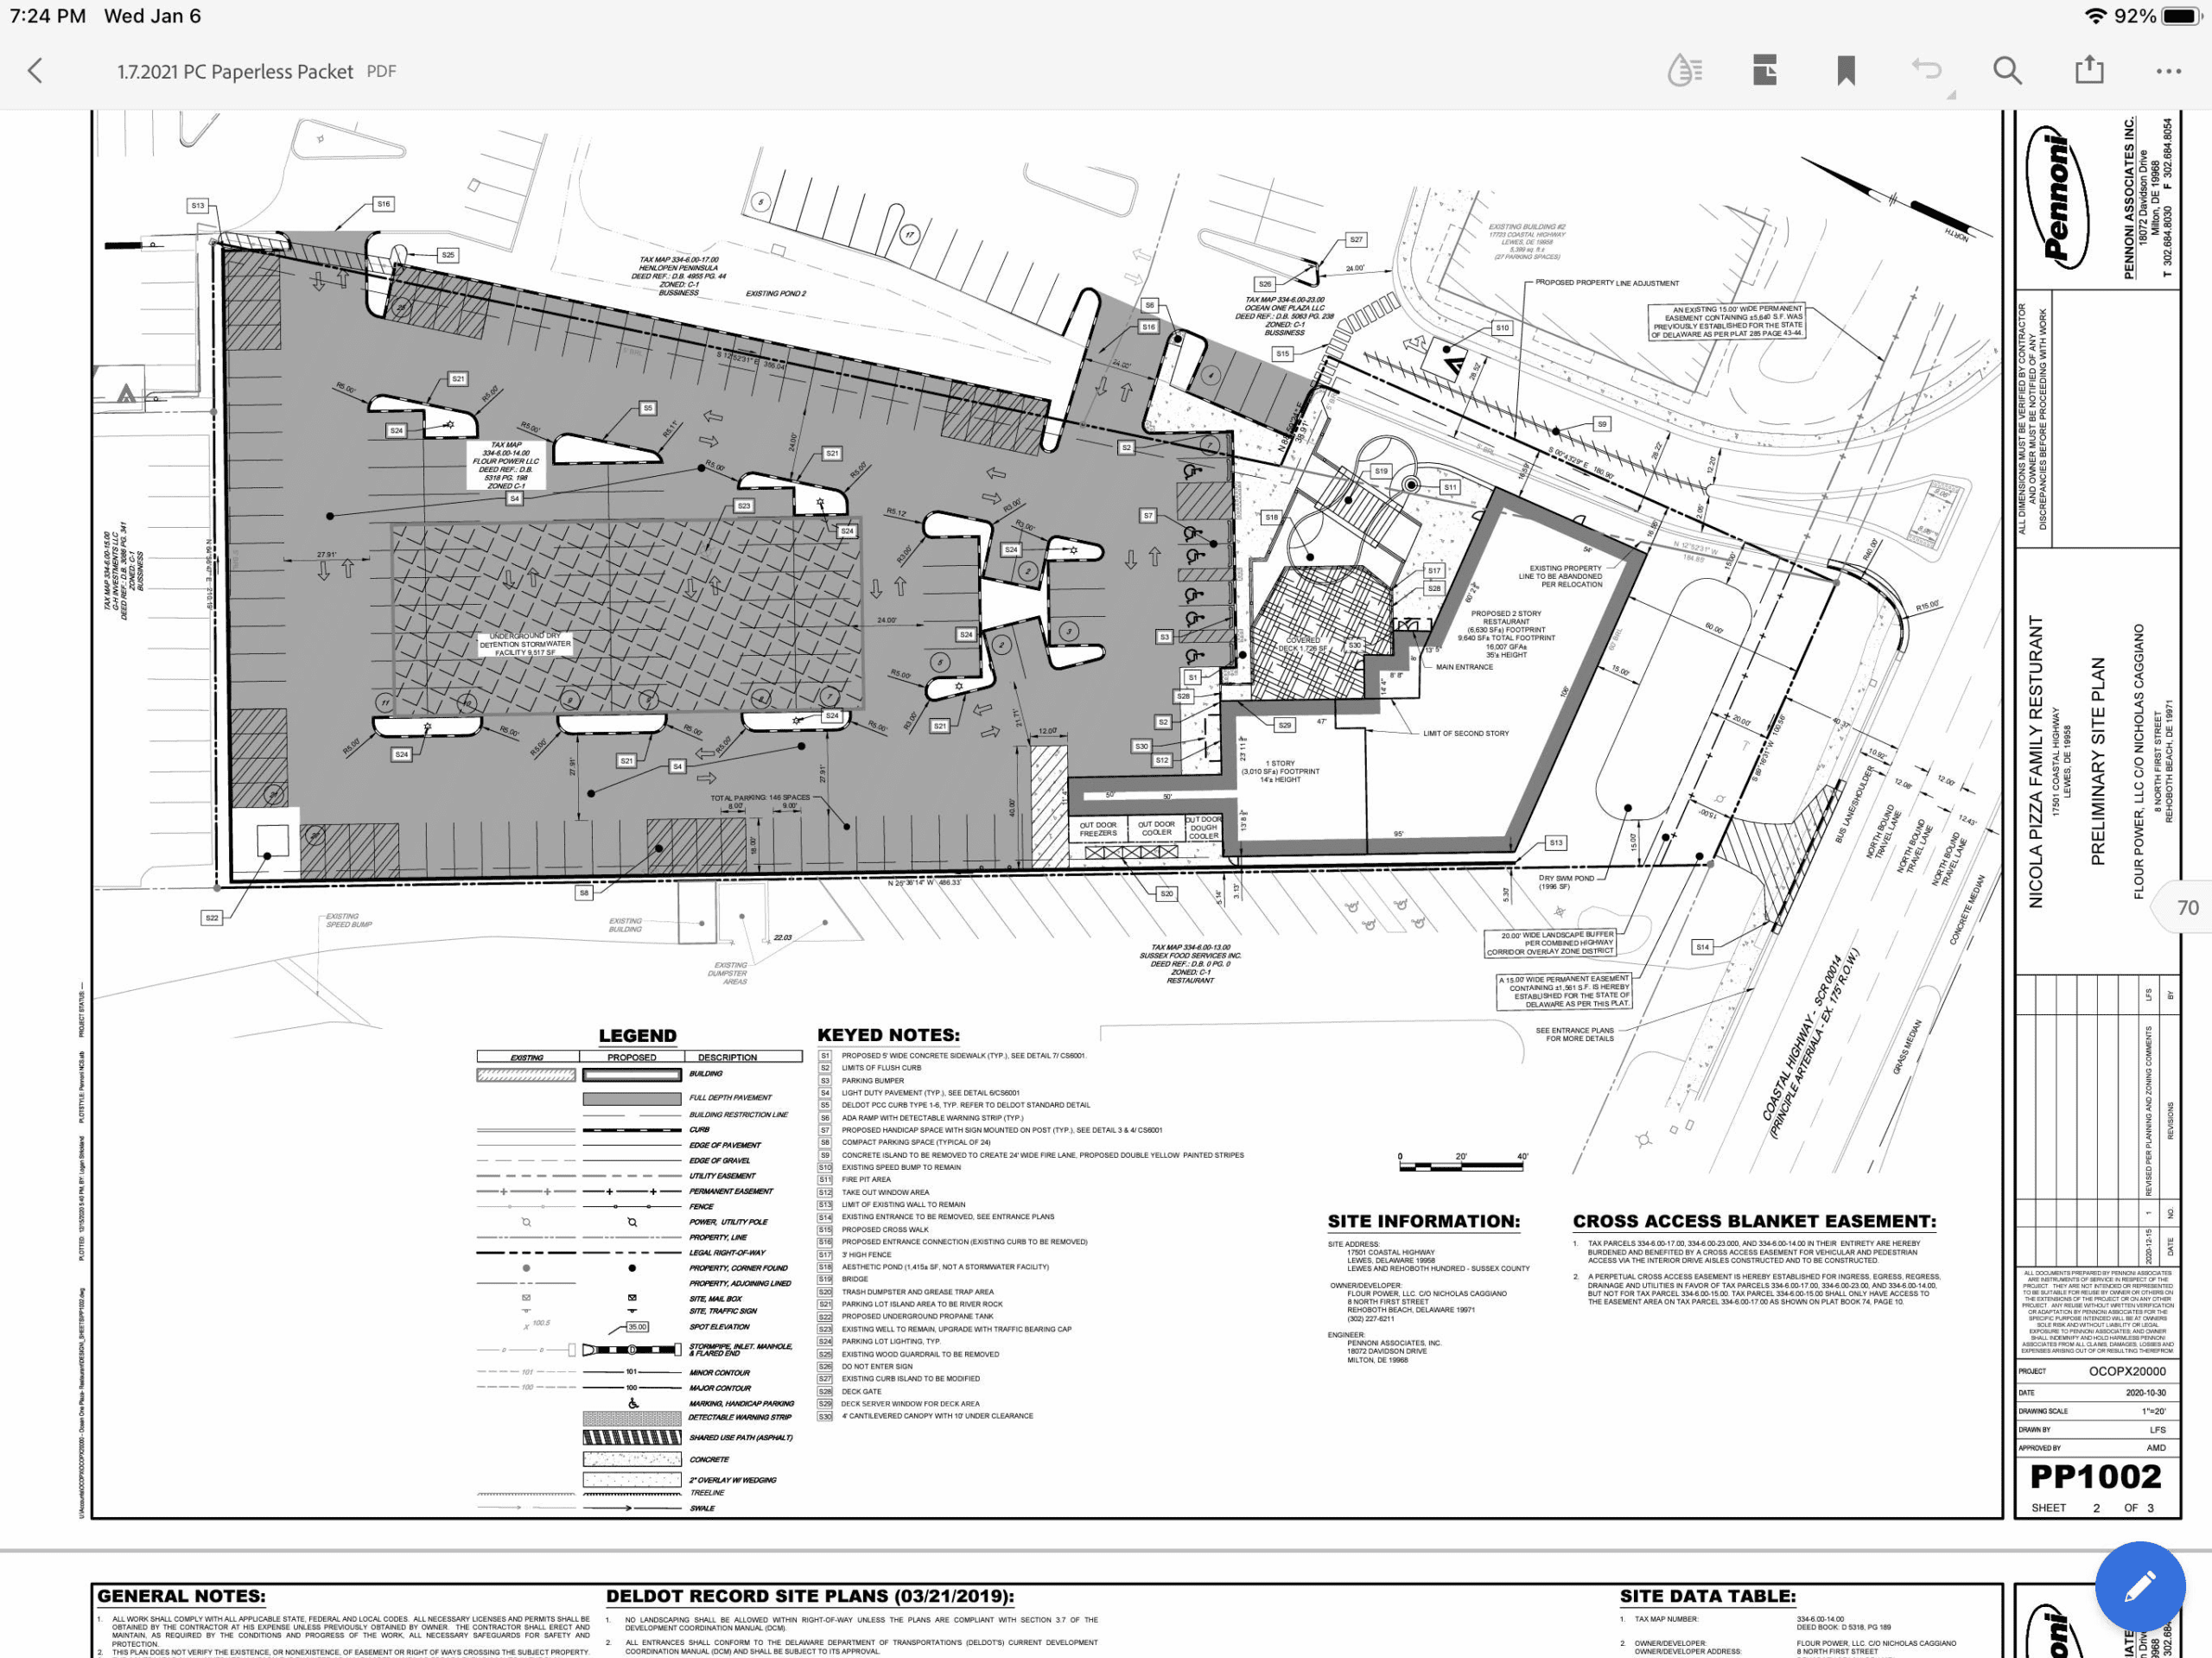 Nicola Pizza preliminary site plan in Lewes